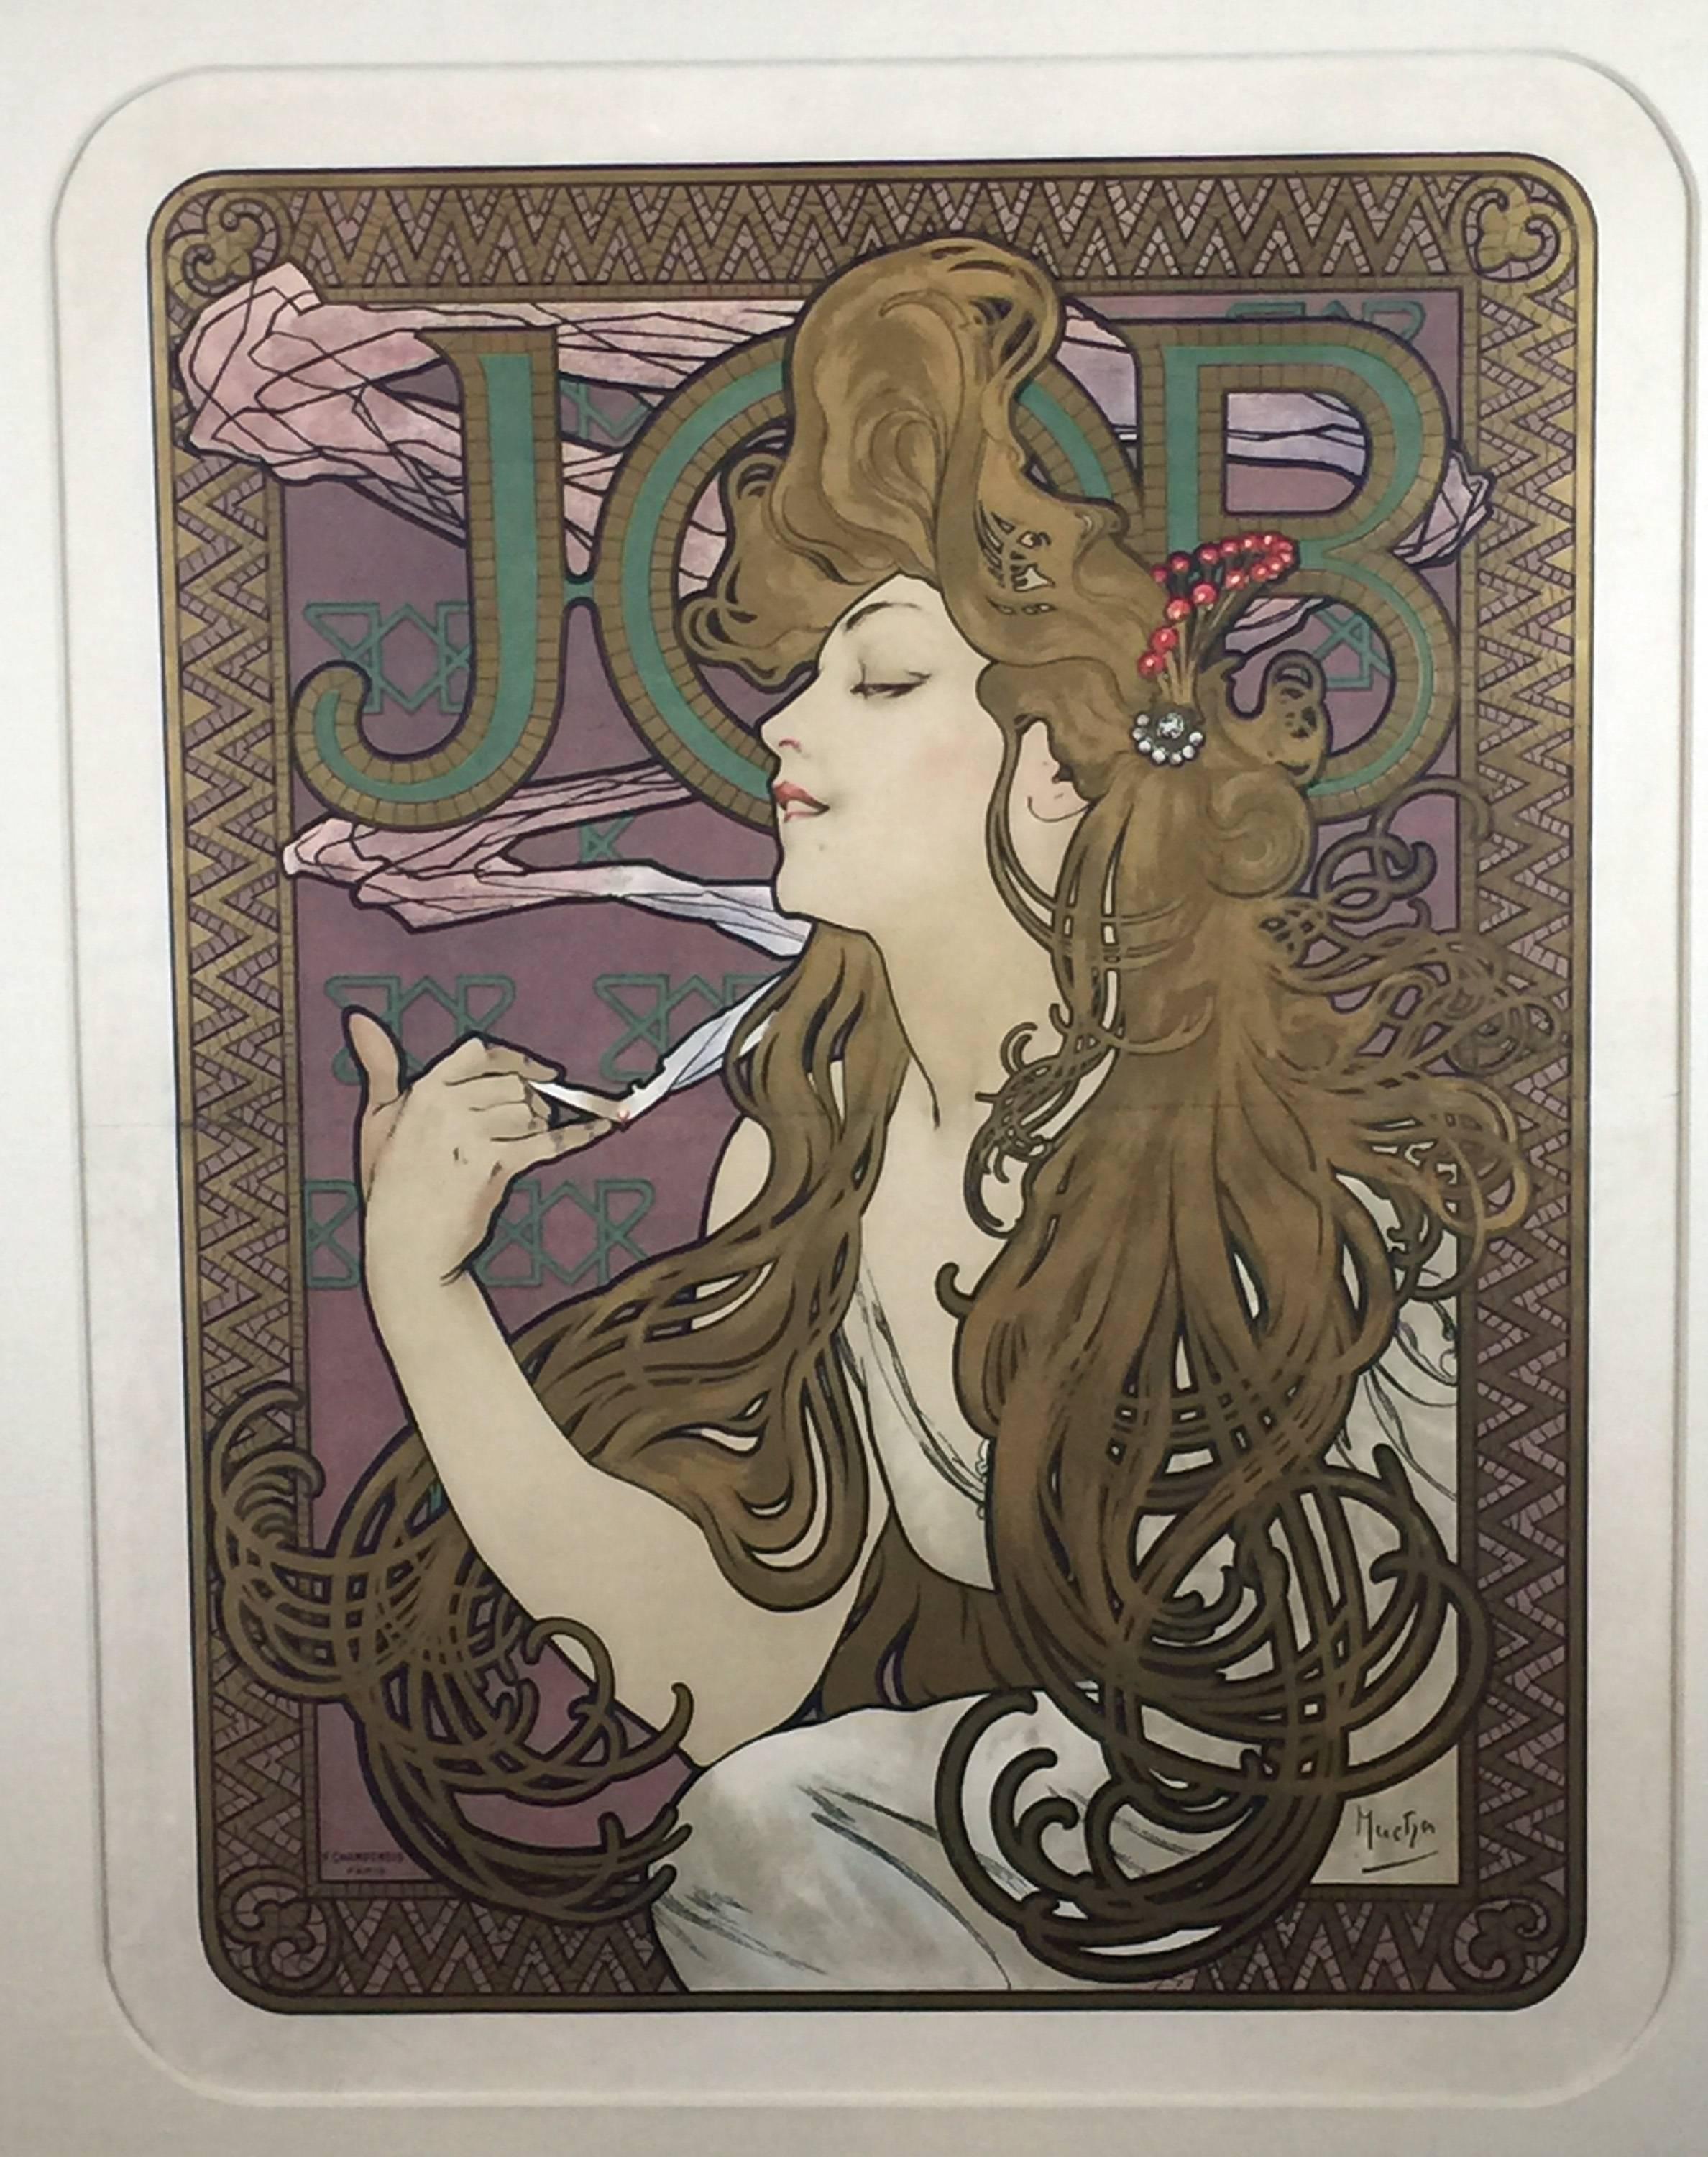 JOB - Print by Alphonse Mucha